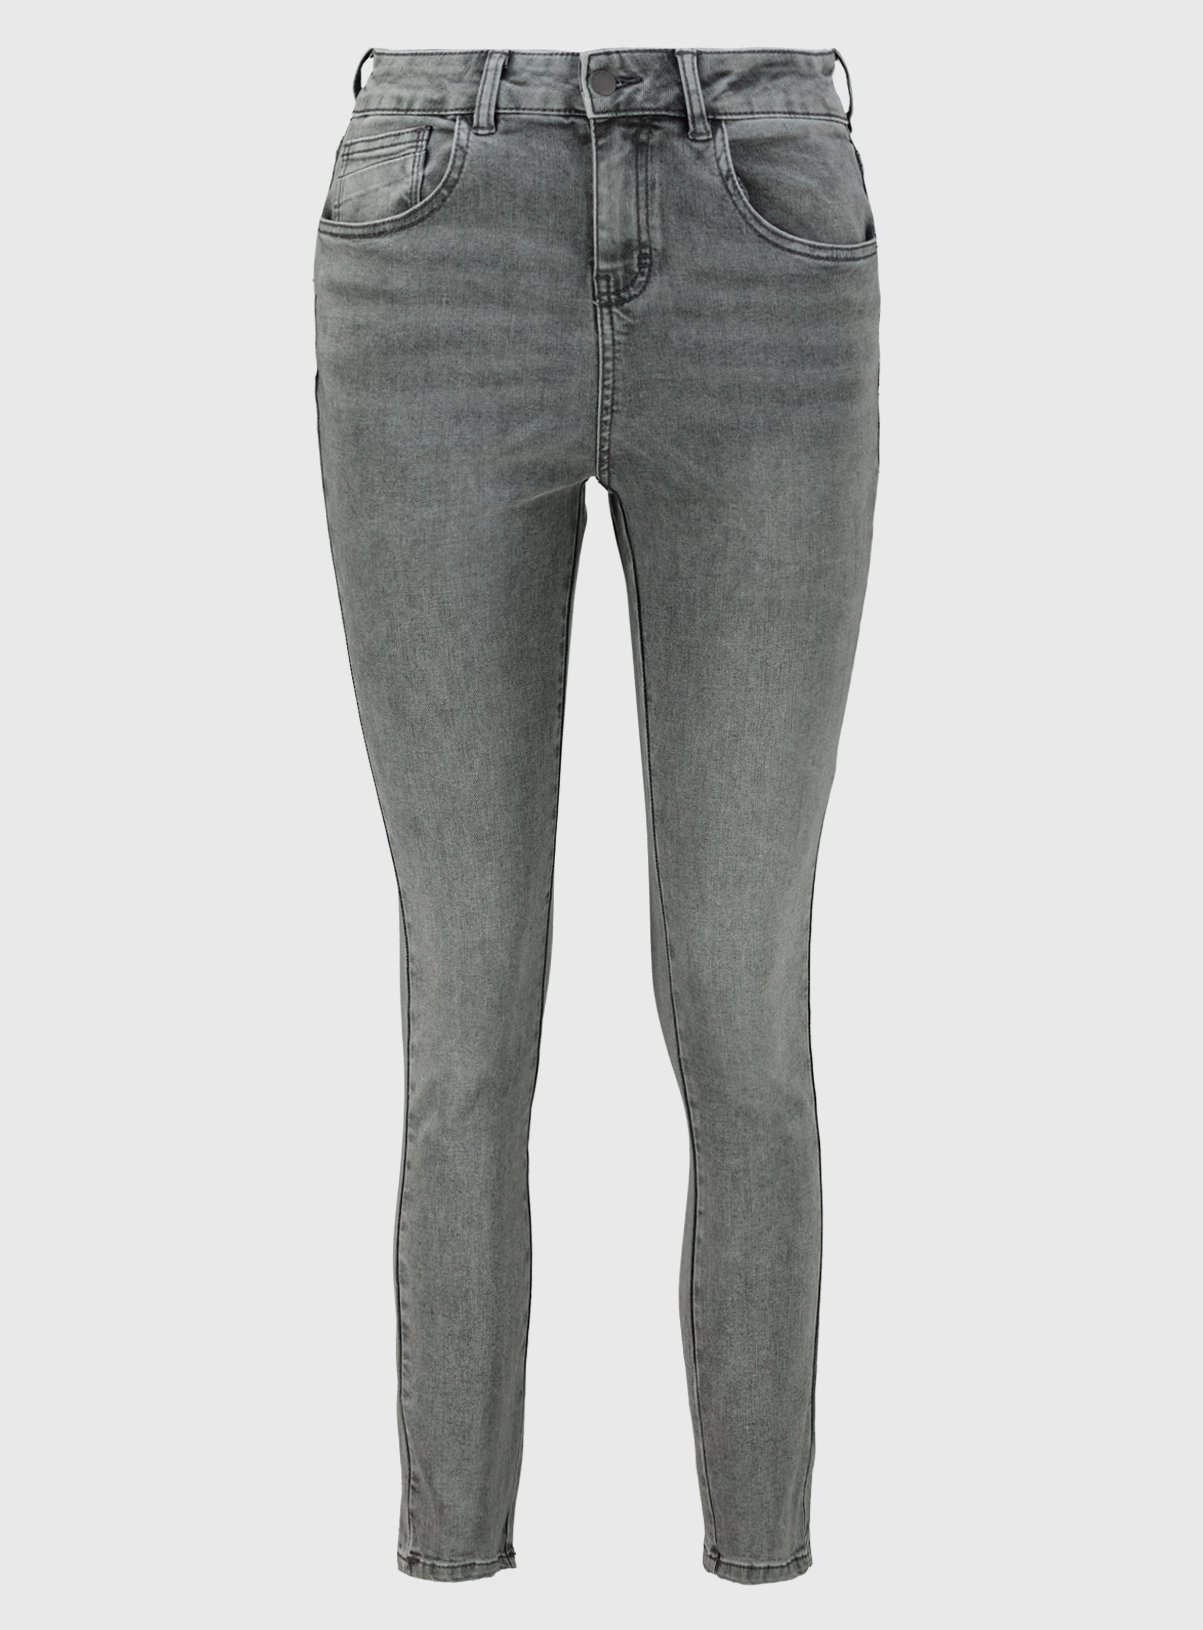 buy grey jeans